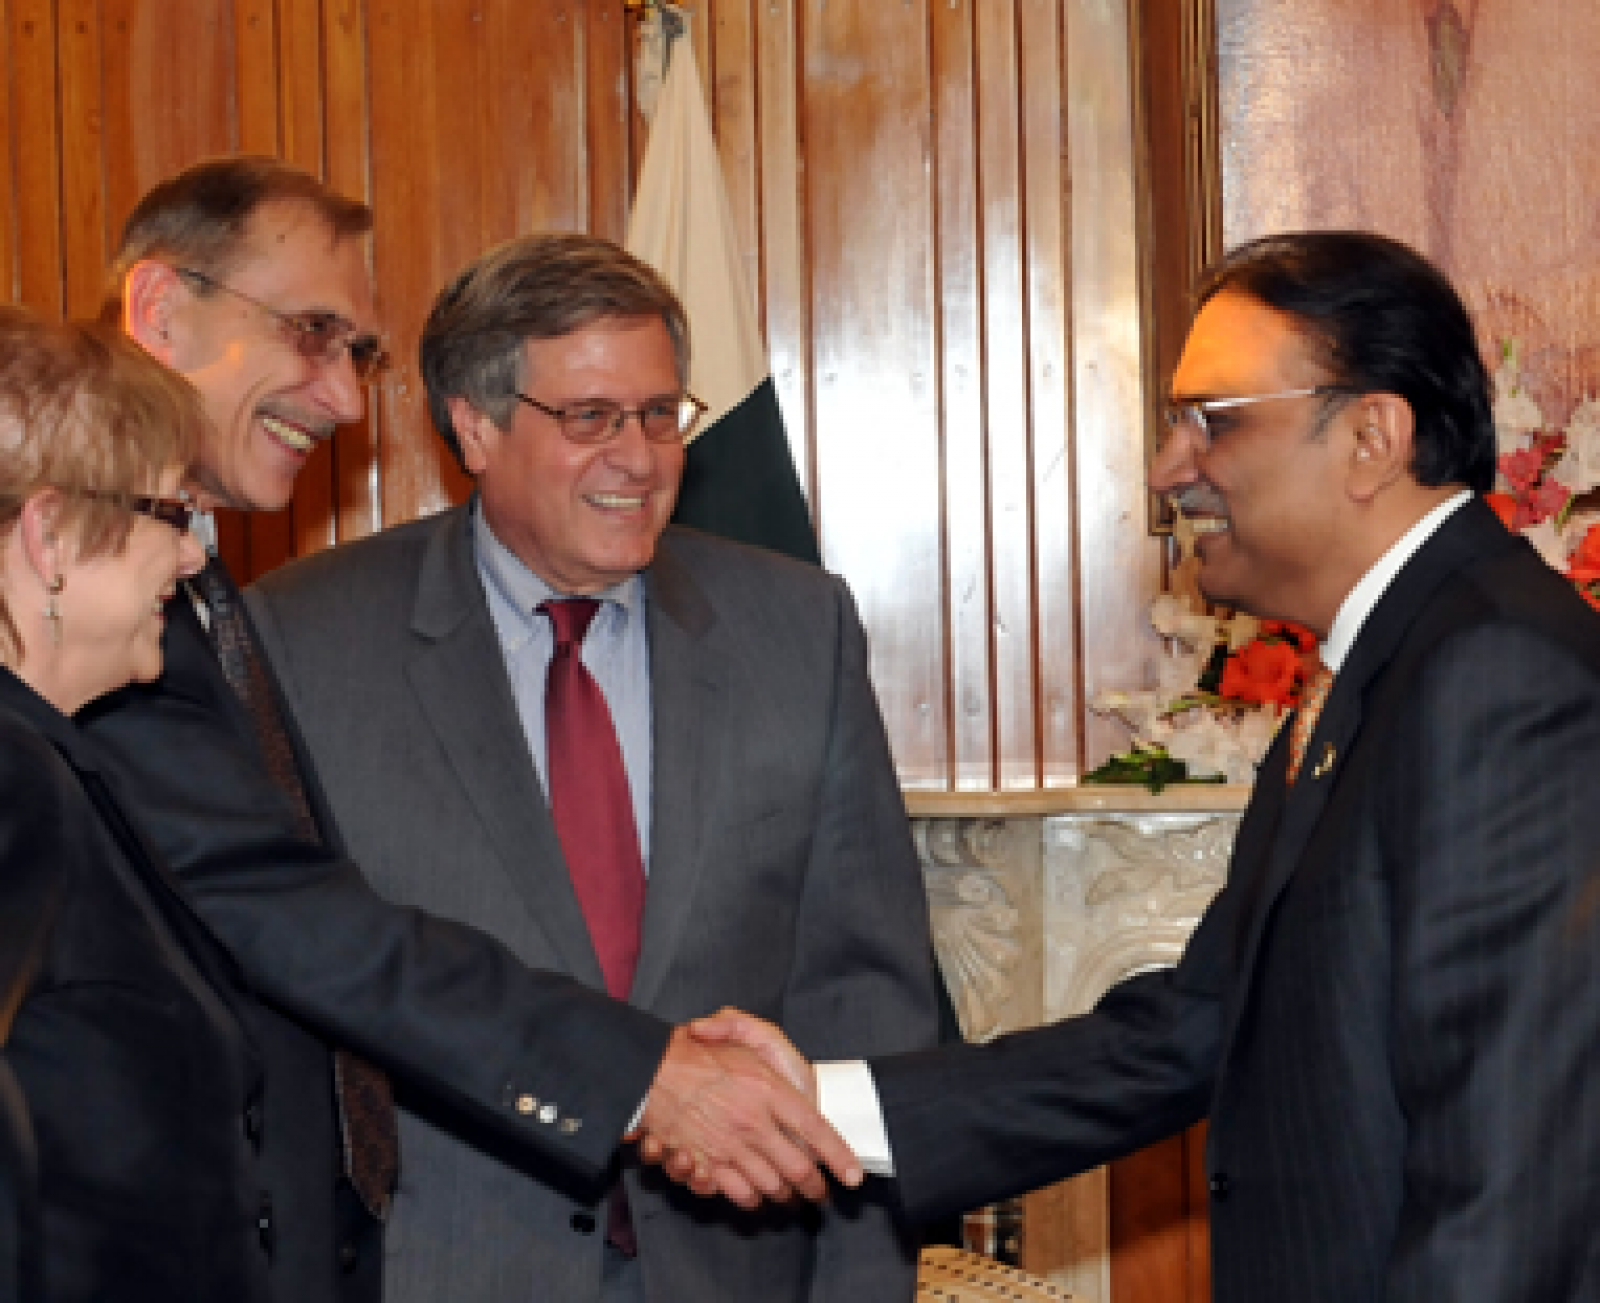 NDI President Wollack Discusses Party Reform with Pakistani President Zardari